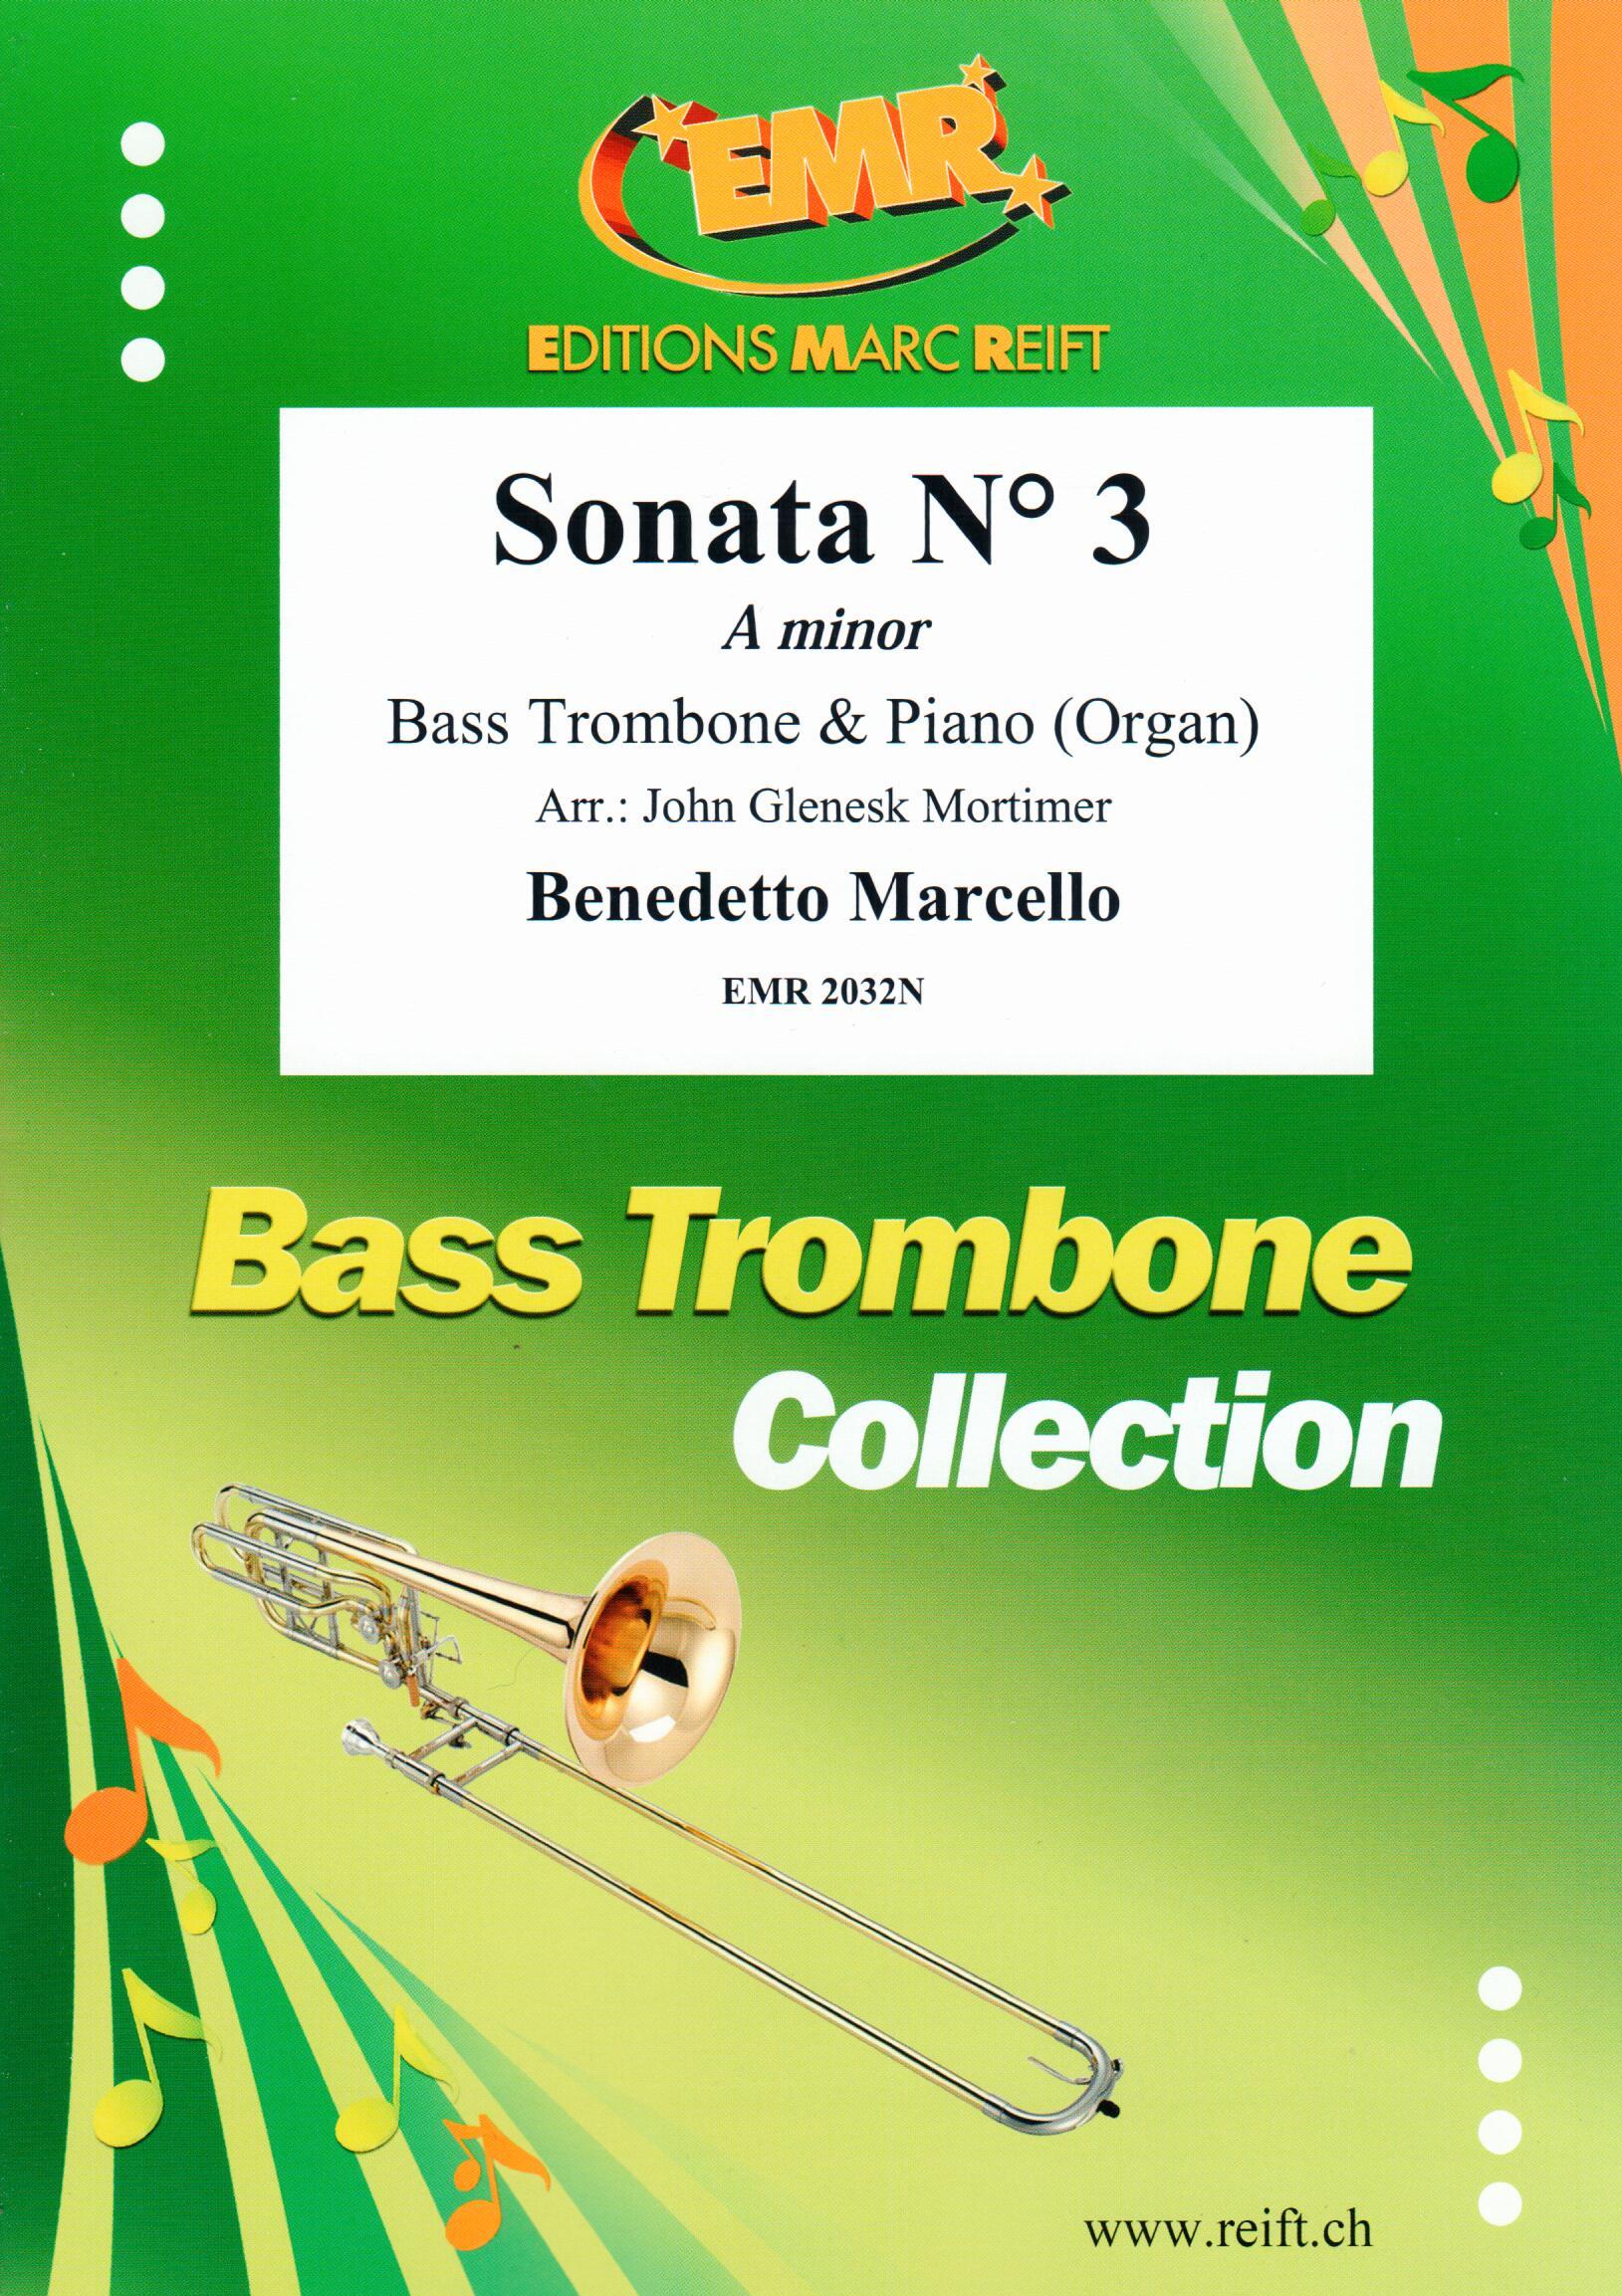 SONATA N° 3 IN A MINOR, EMR Bass Trombone